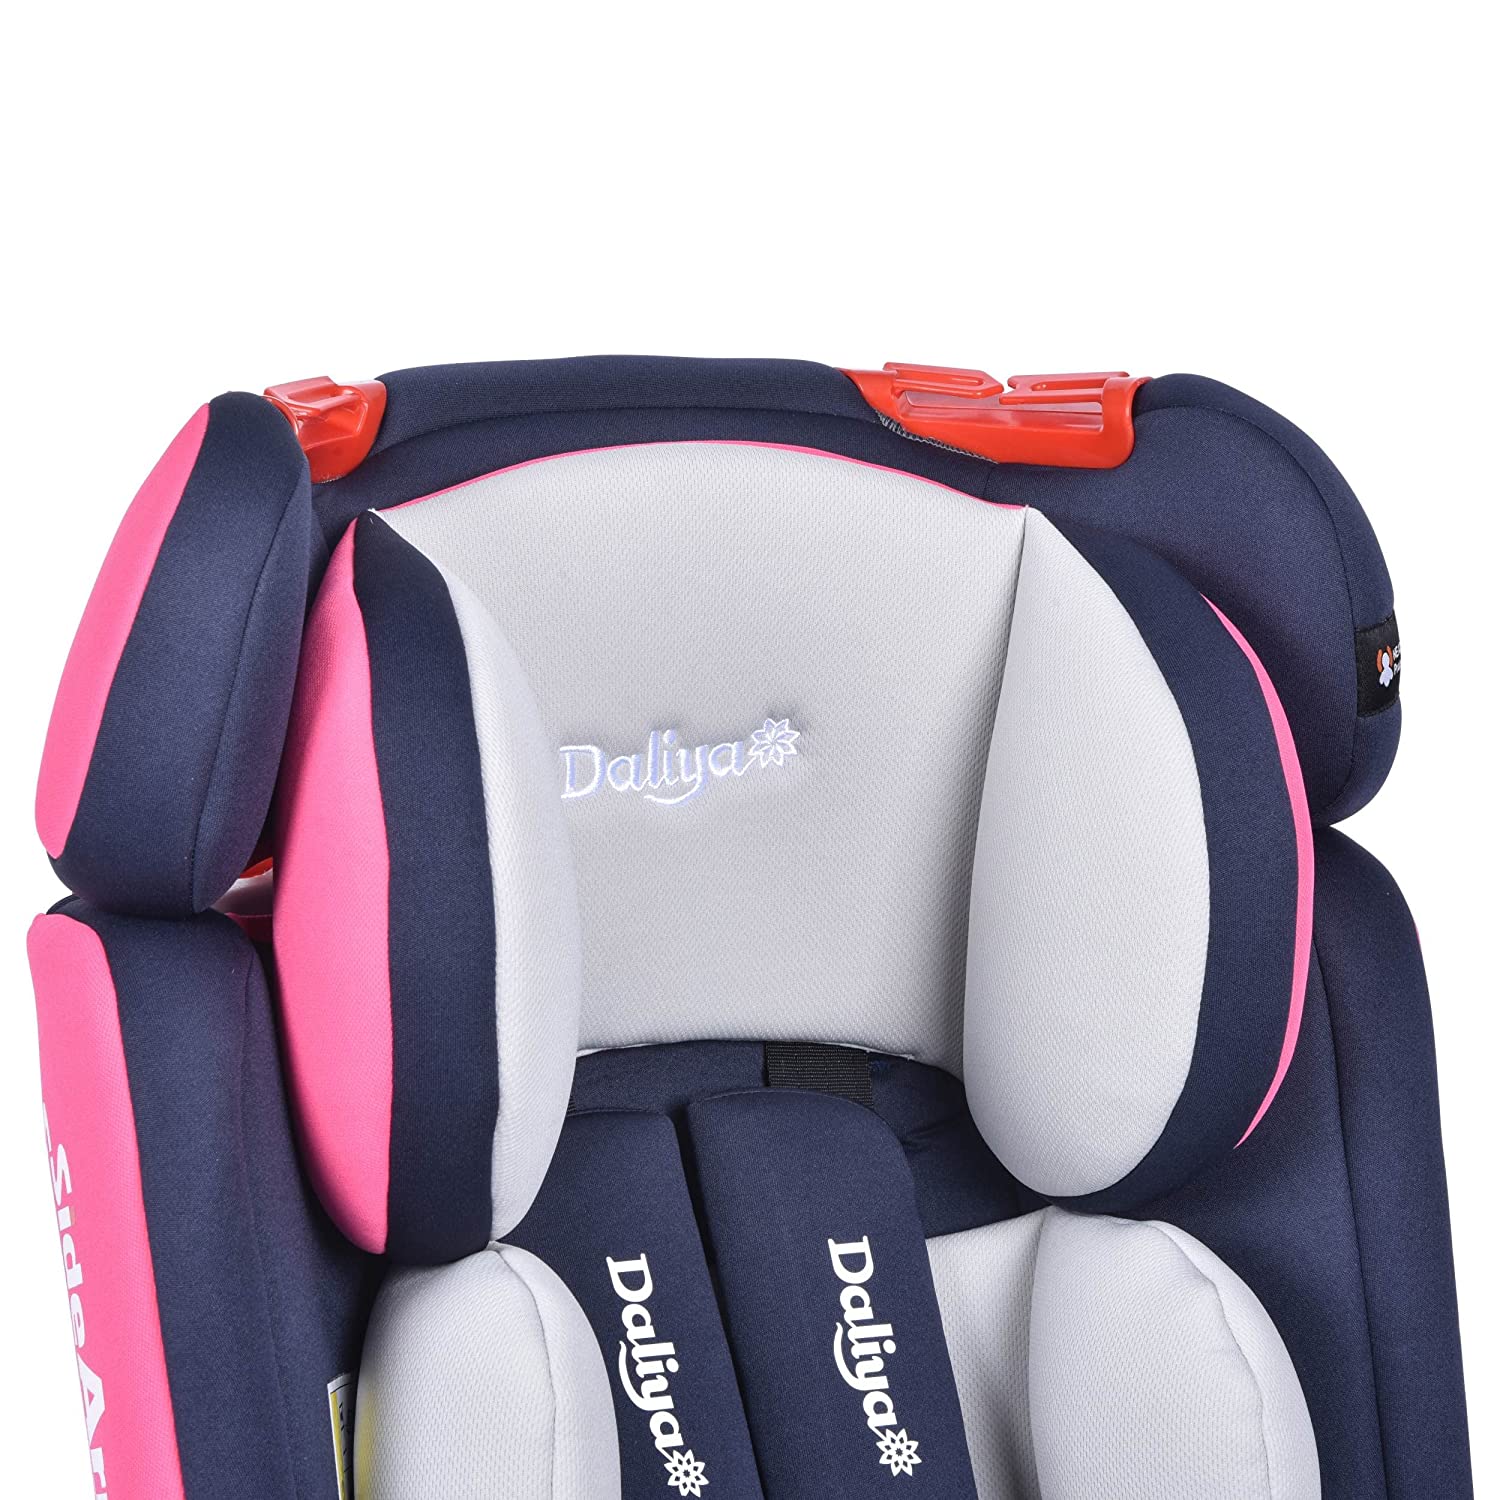 Daliya® Sitorino Child Seat 0-36 kg with Isofix & Top Tether I Car Seat Group 0+1+2+3 I 5-Point Seat Belt I Pink